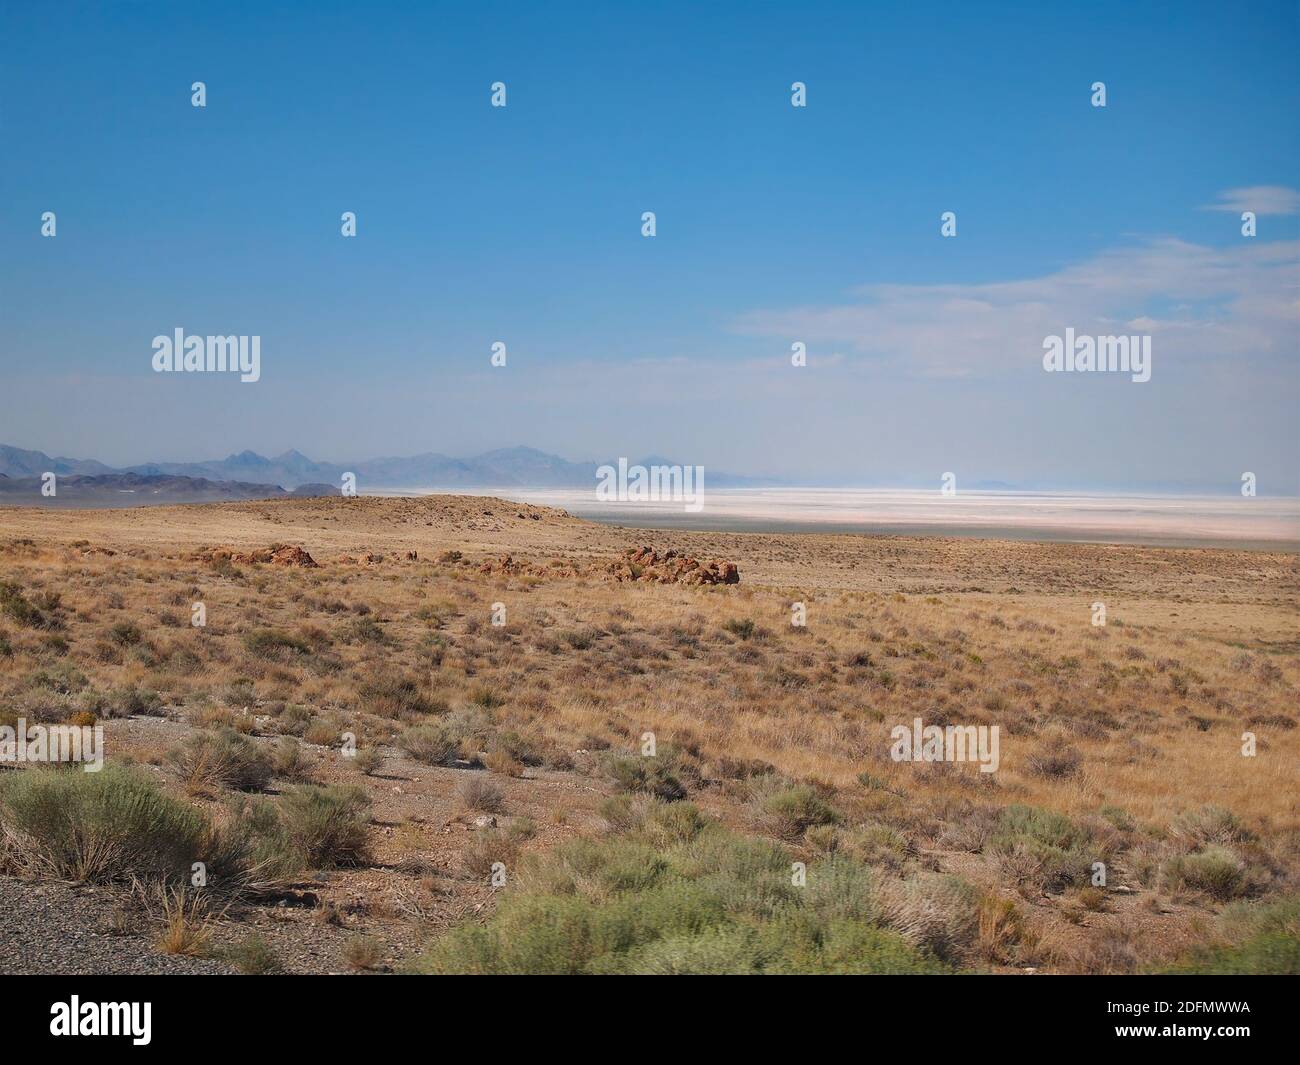 Looking across the arid, sandy, shrubby terrain of eastern Nevada into the Great Salt Lake Desert of western Utah. Stock Photo